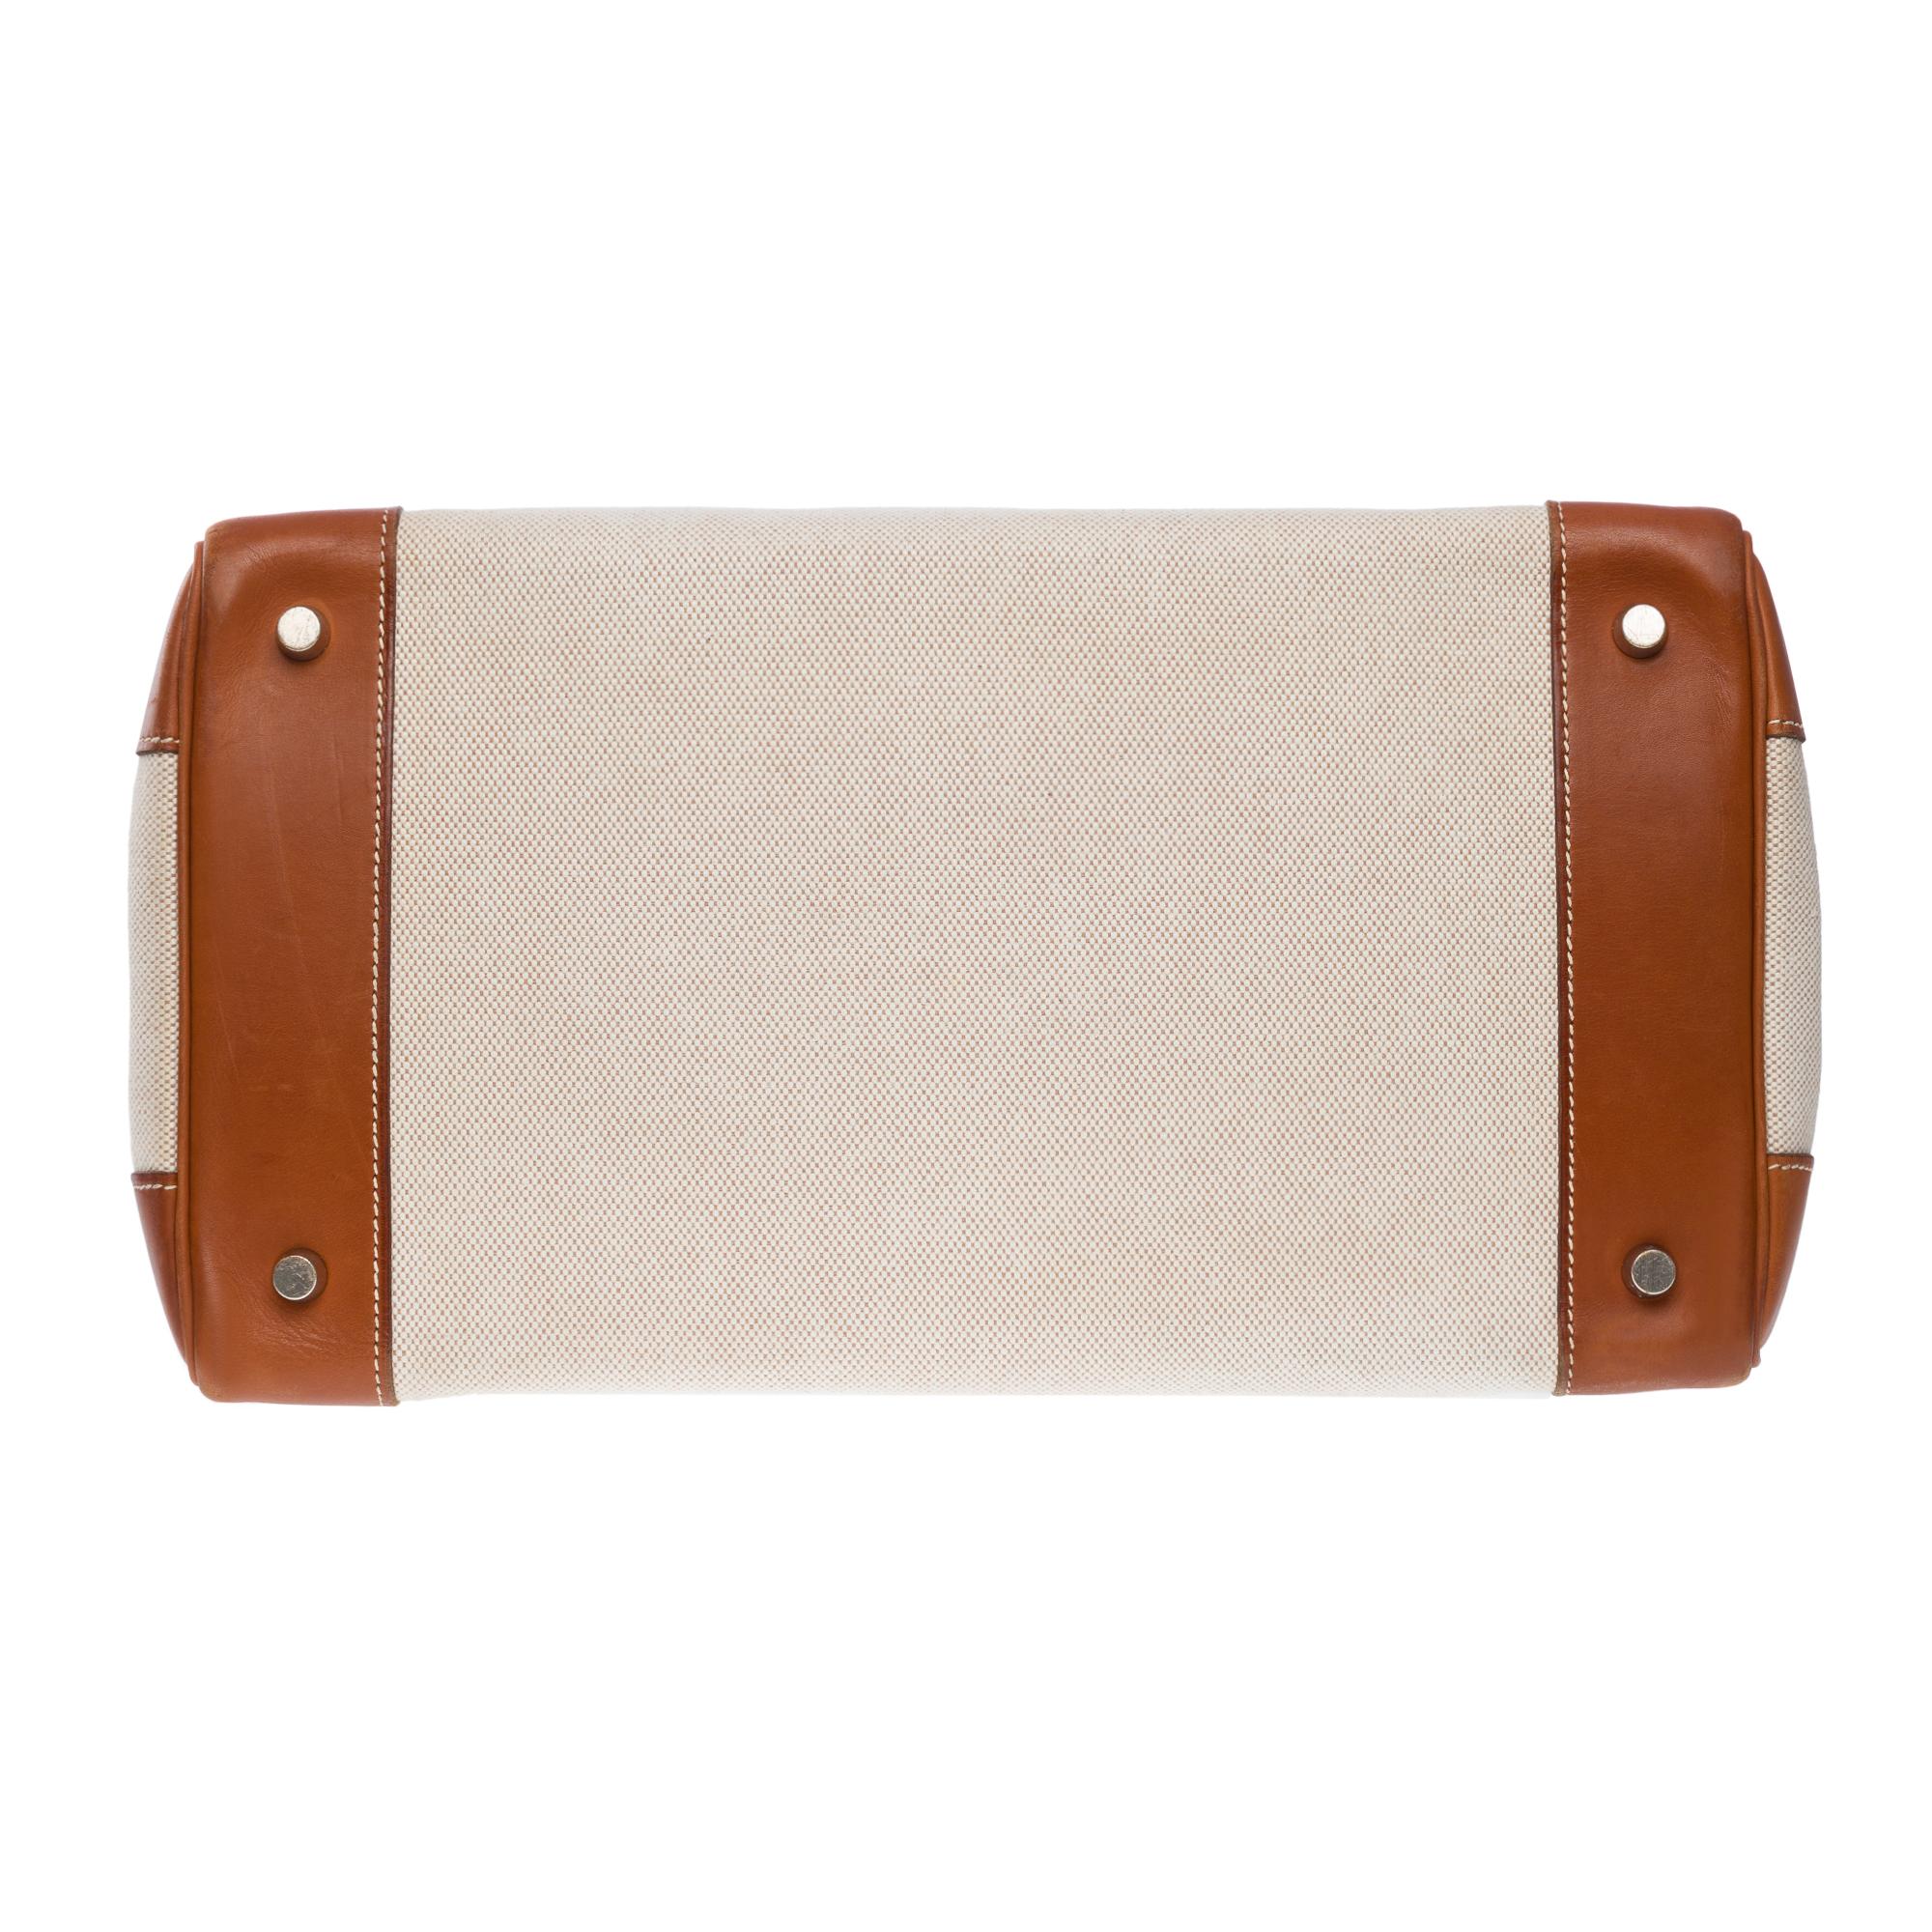 Fantastic Hermès Birkin 35 handbag in brown Barenia leather & Beige Canvas, SHW 5